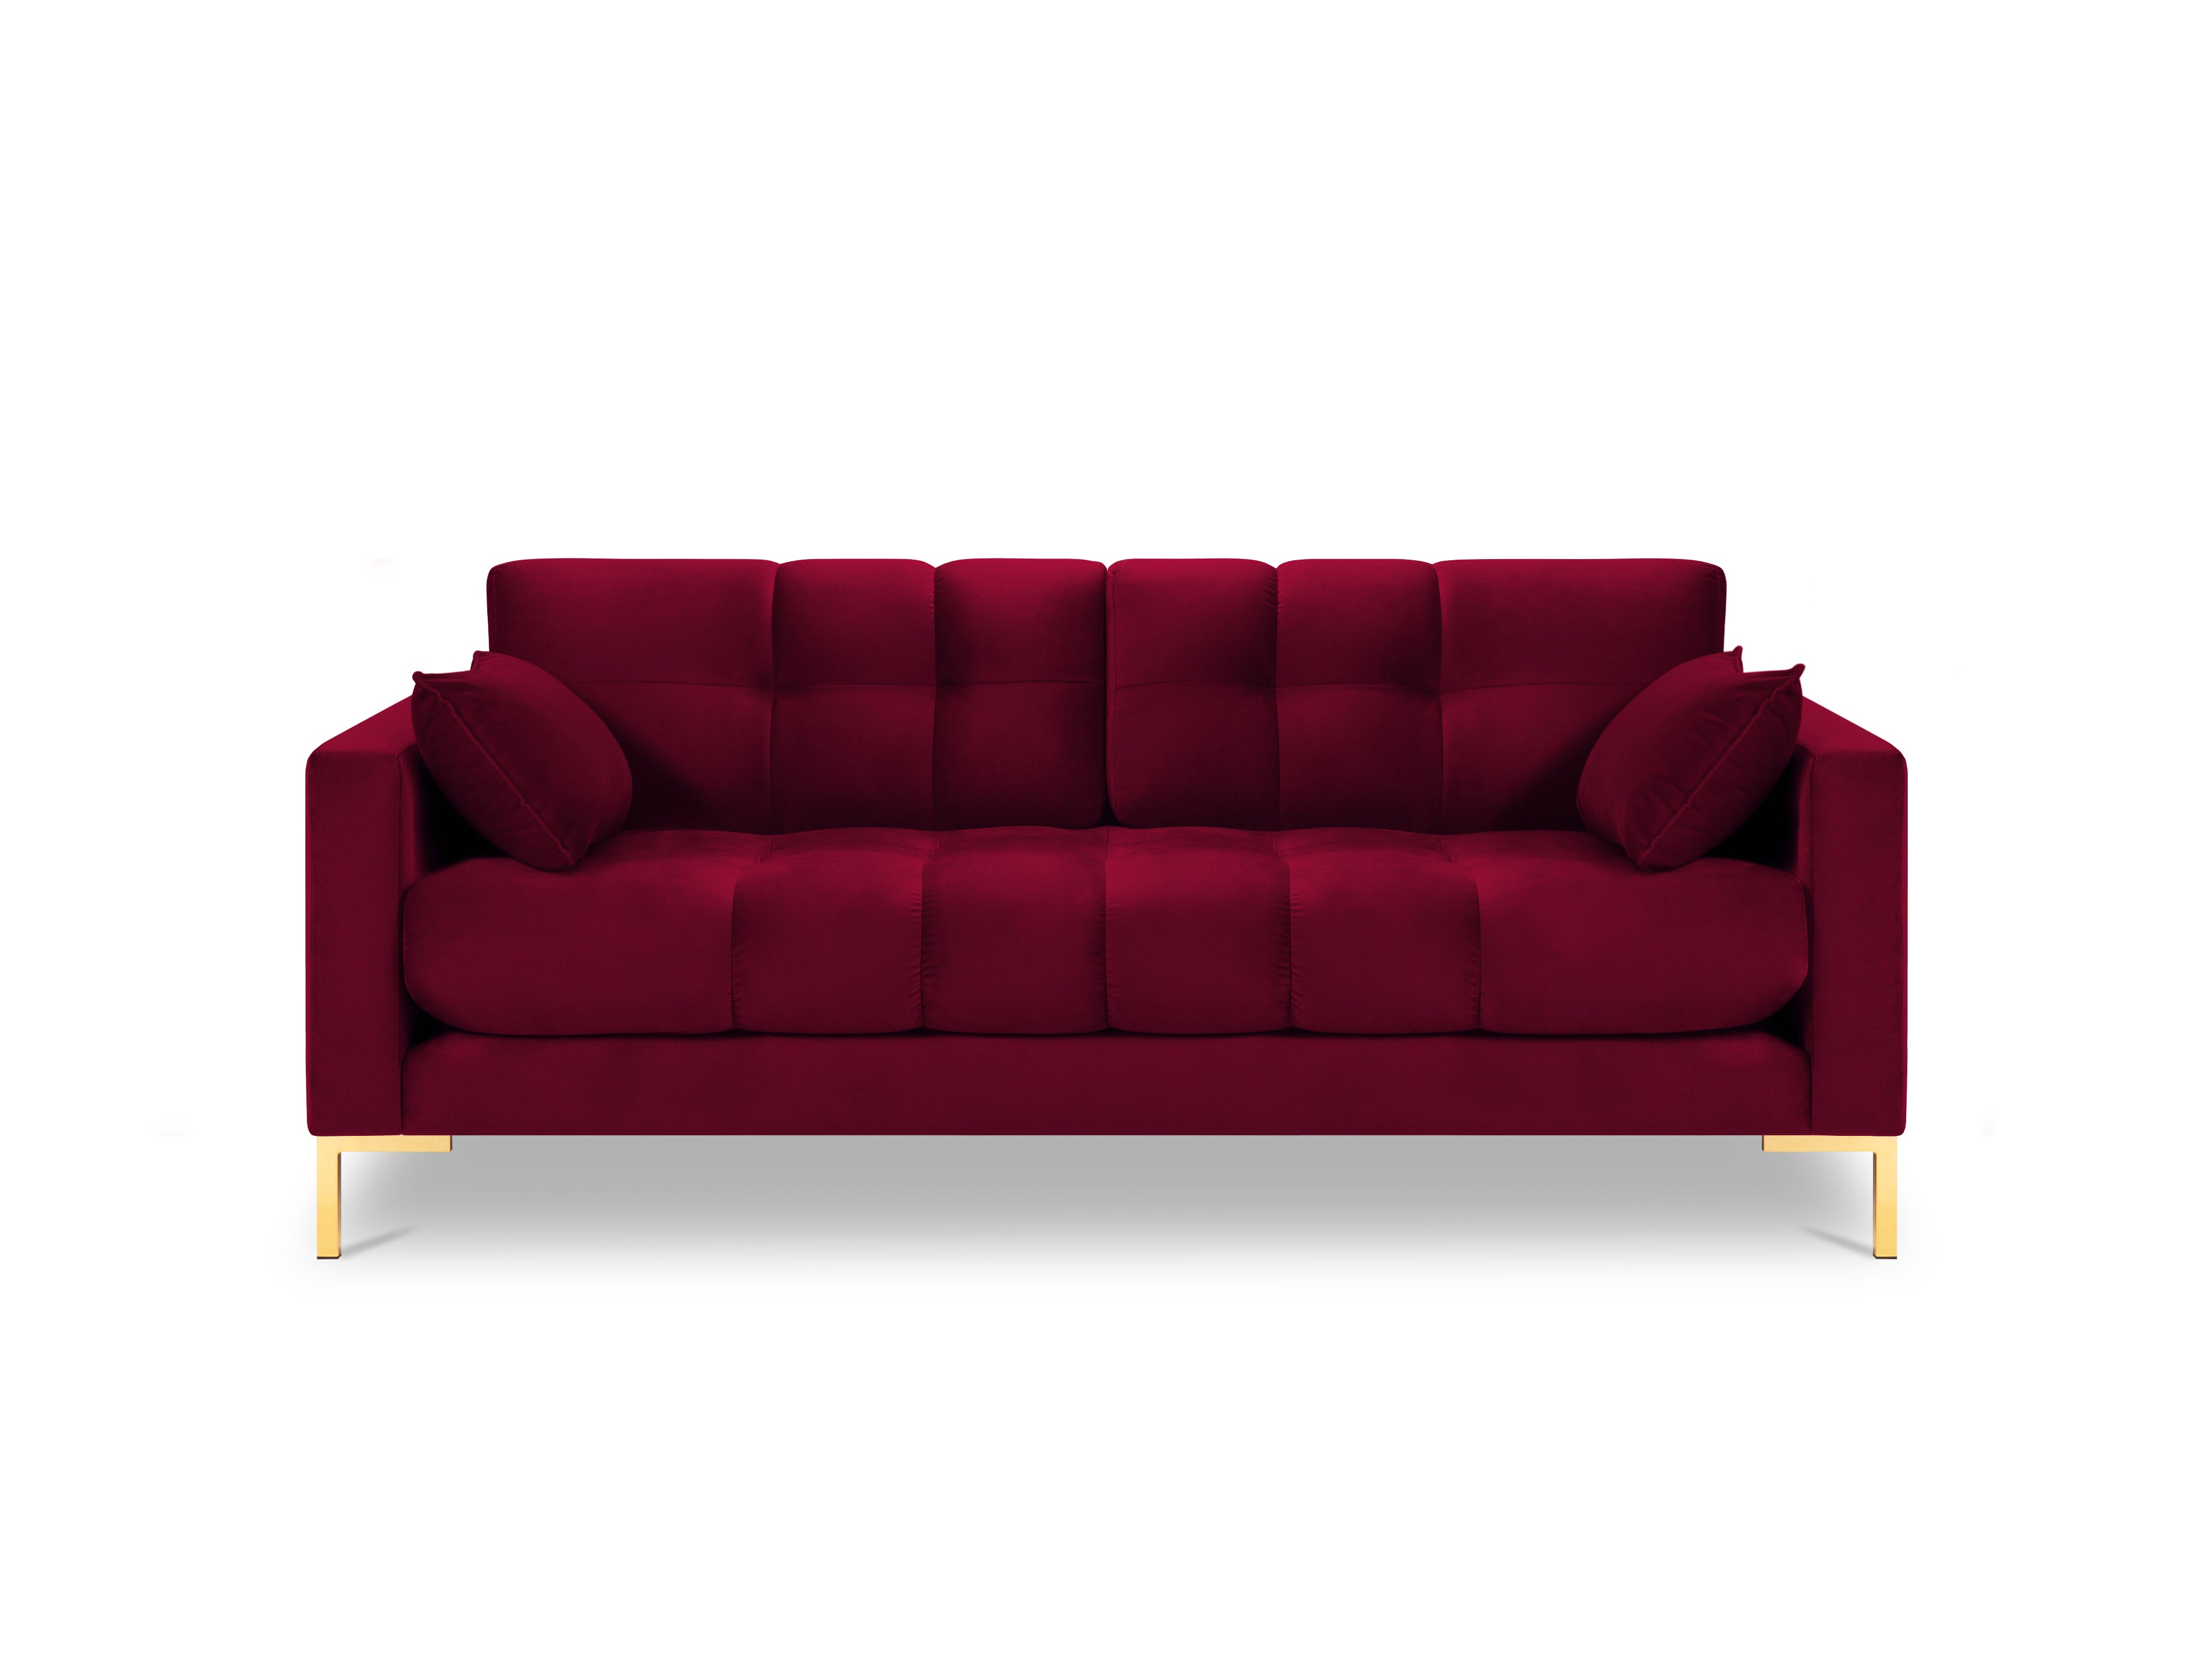 Quilted red velvet sofa